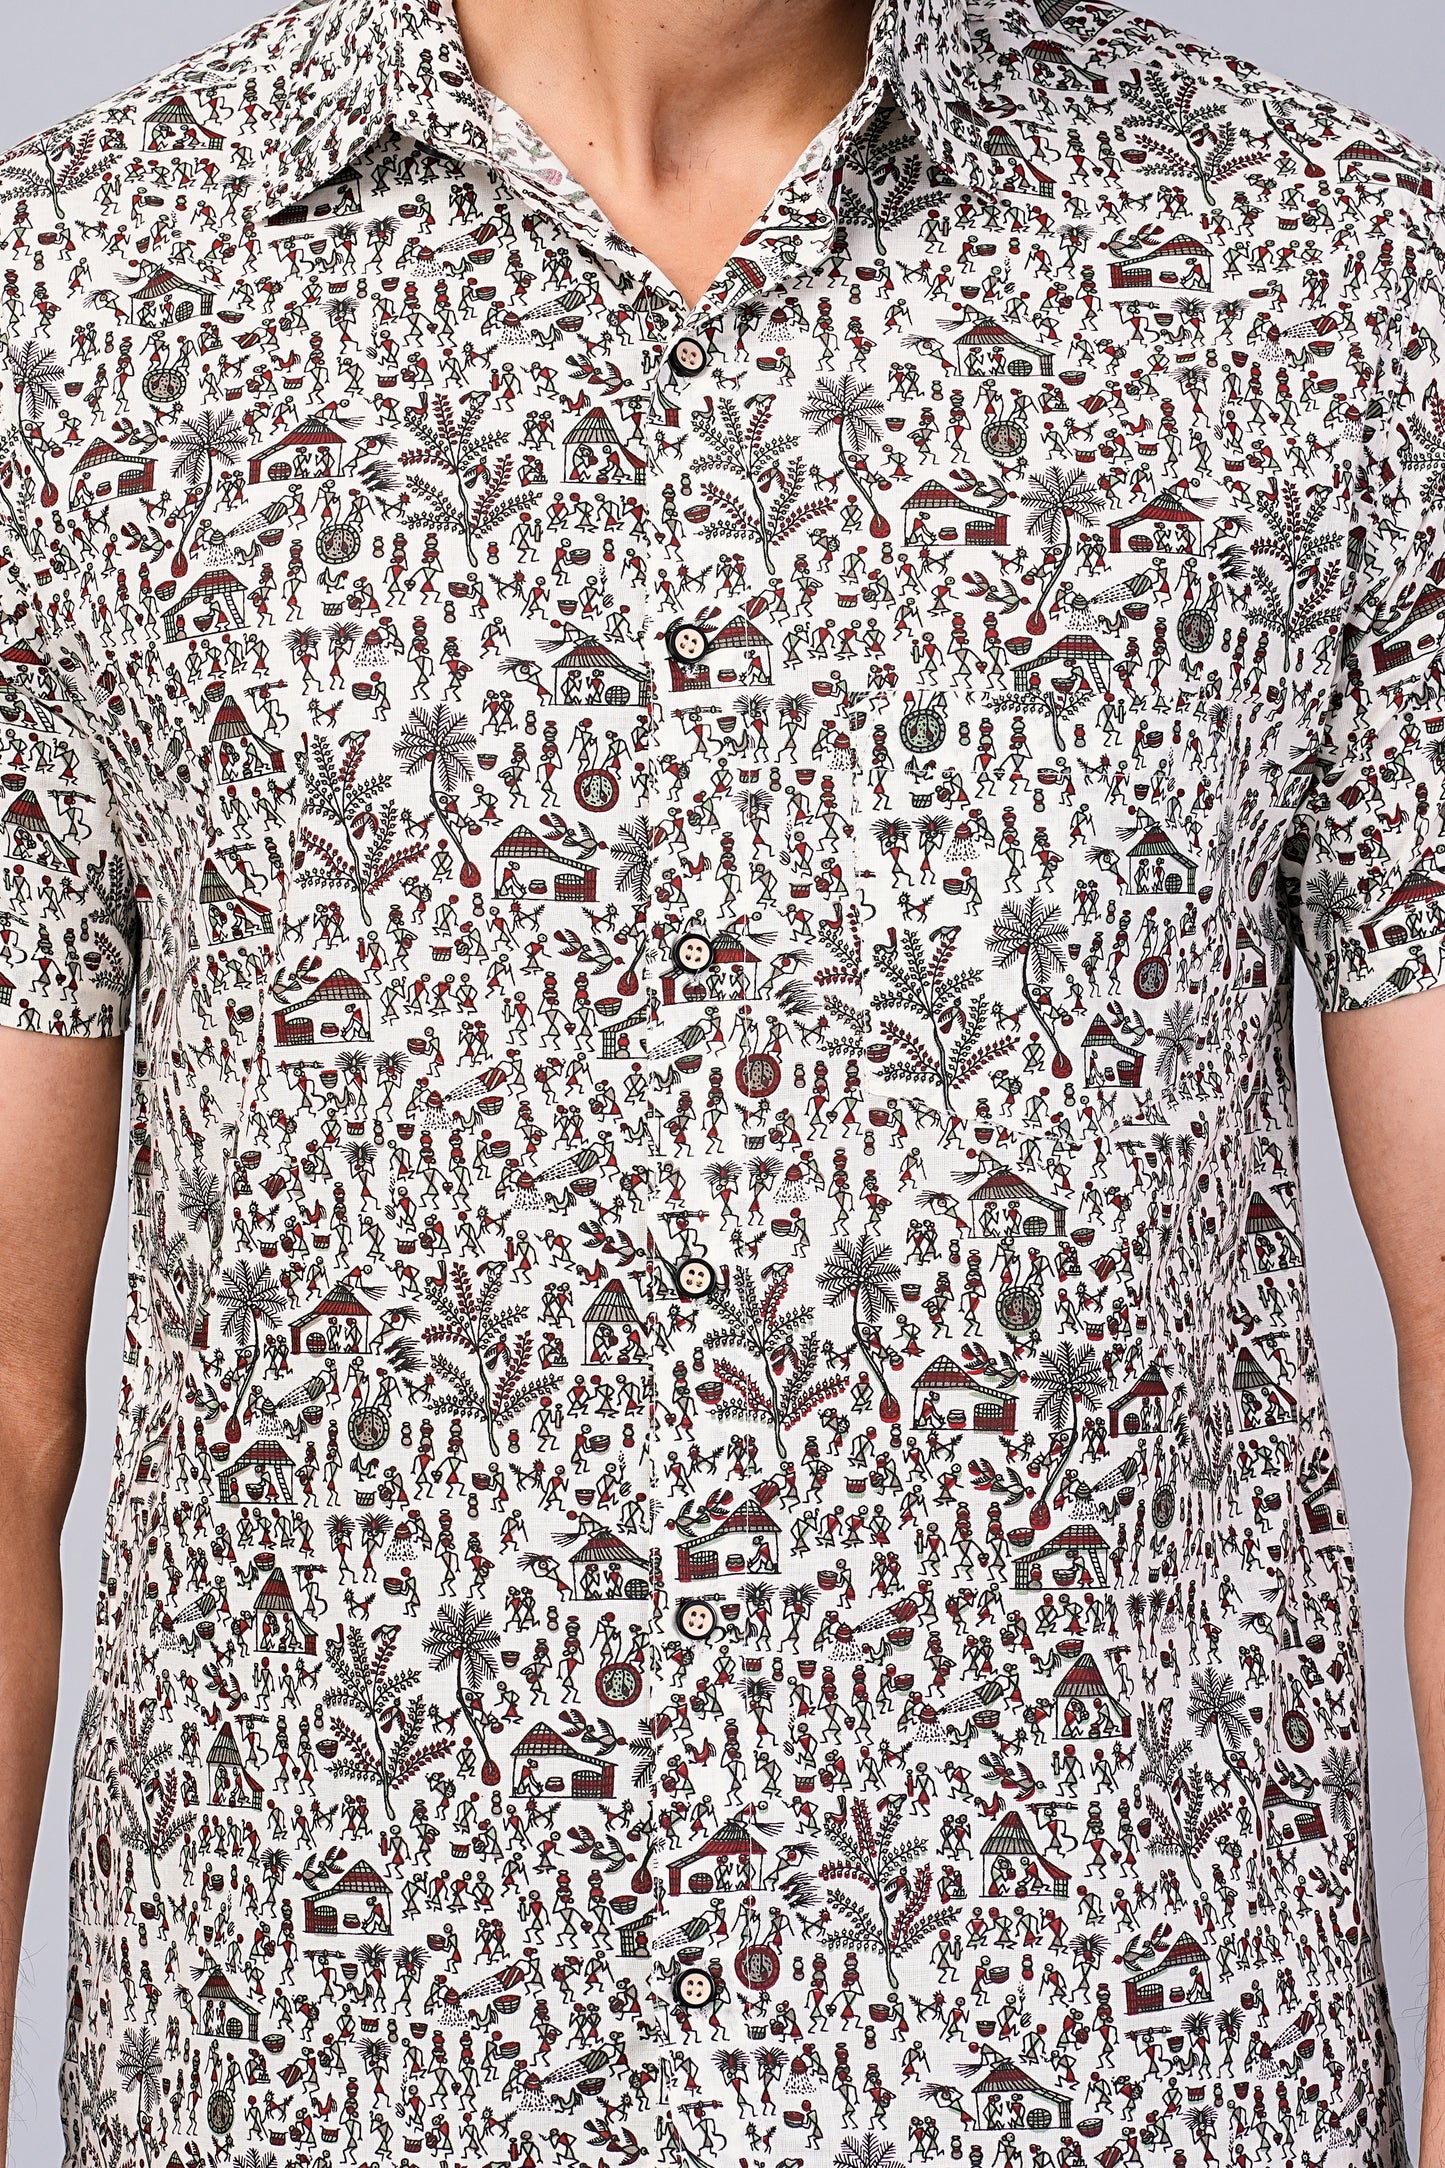 Men's Ethnic Motif Printed Half-Sleeves shirts